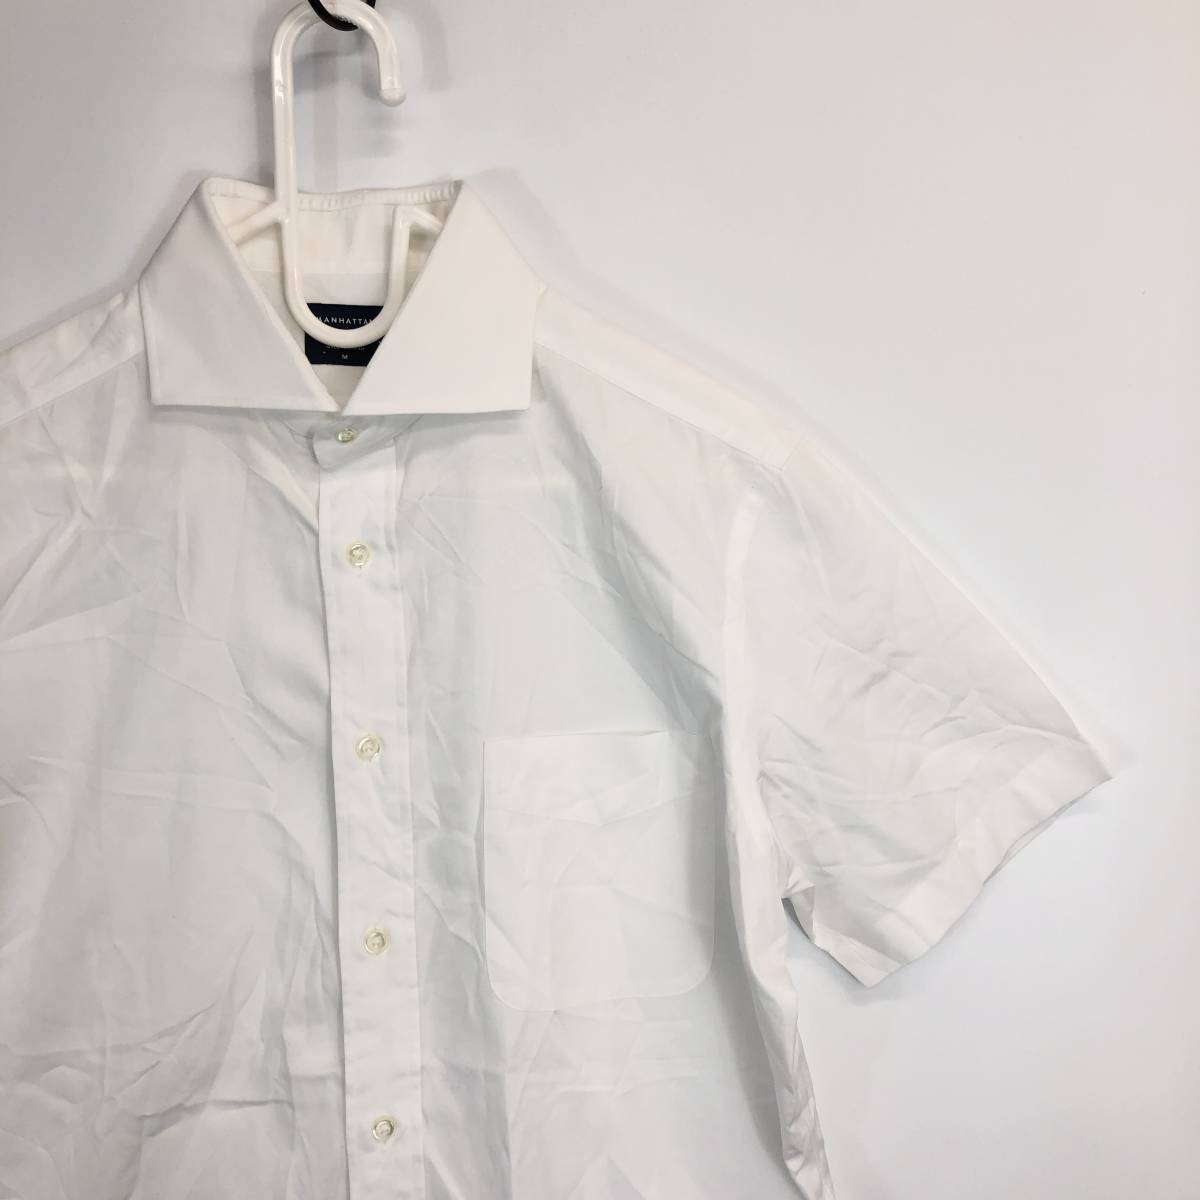 Maker's Shirt 鎌倉シャツ メンズ 夏 半袖シャツ マンハッタン MANHATTAN ホワイト 日本製 RJ2006-02 Mサイズ